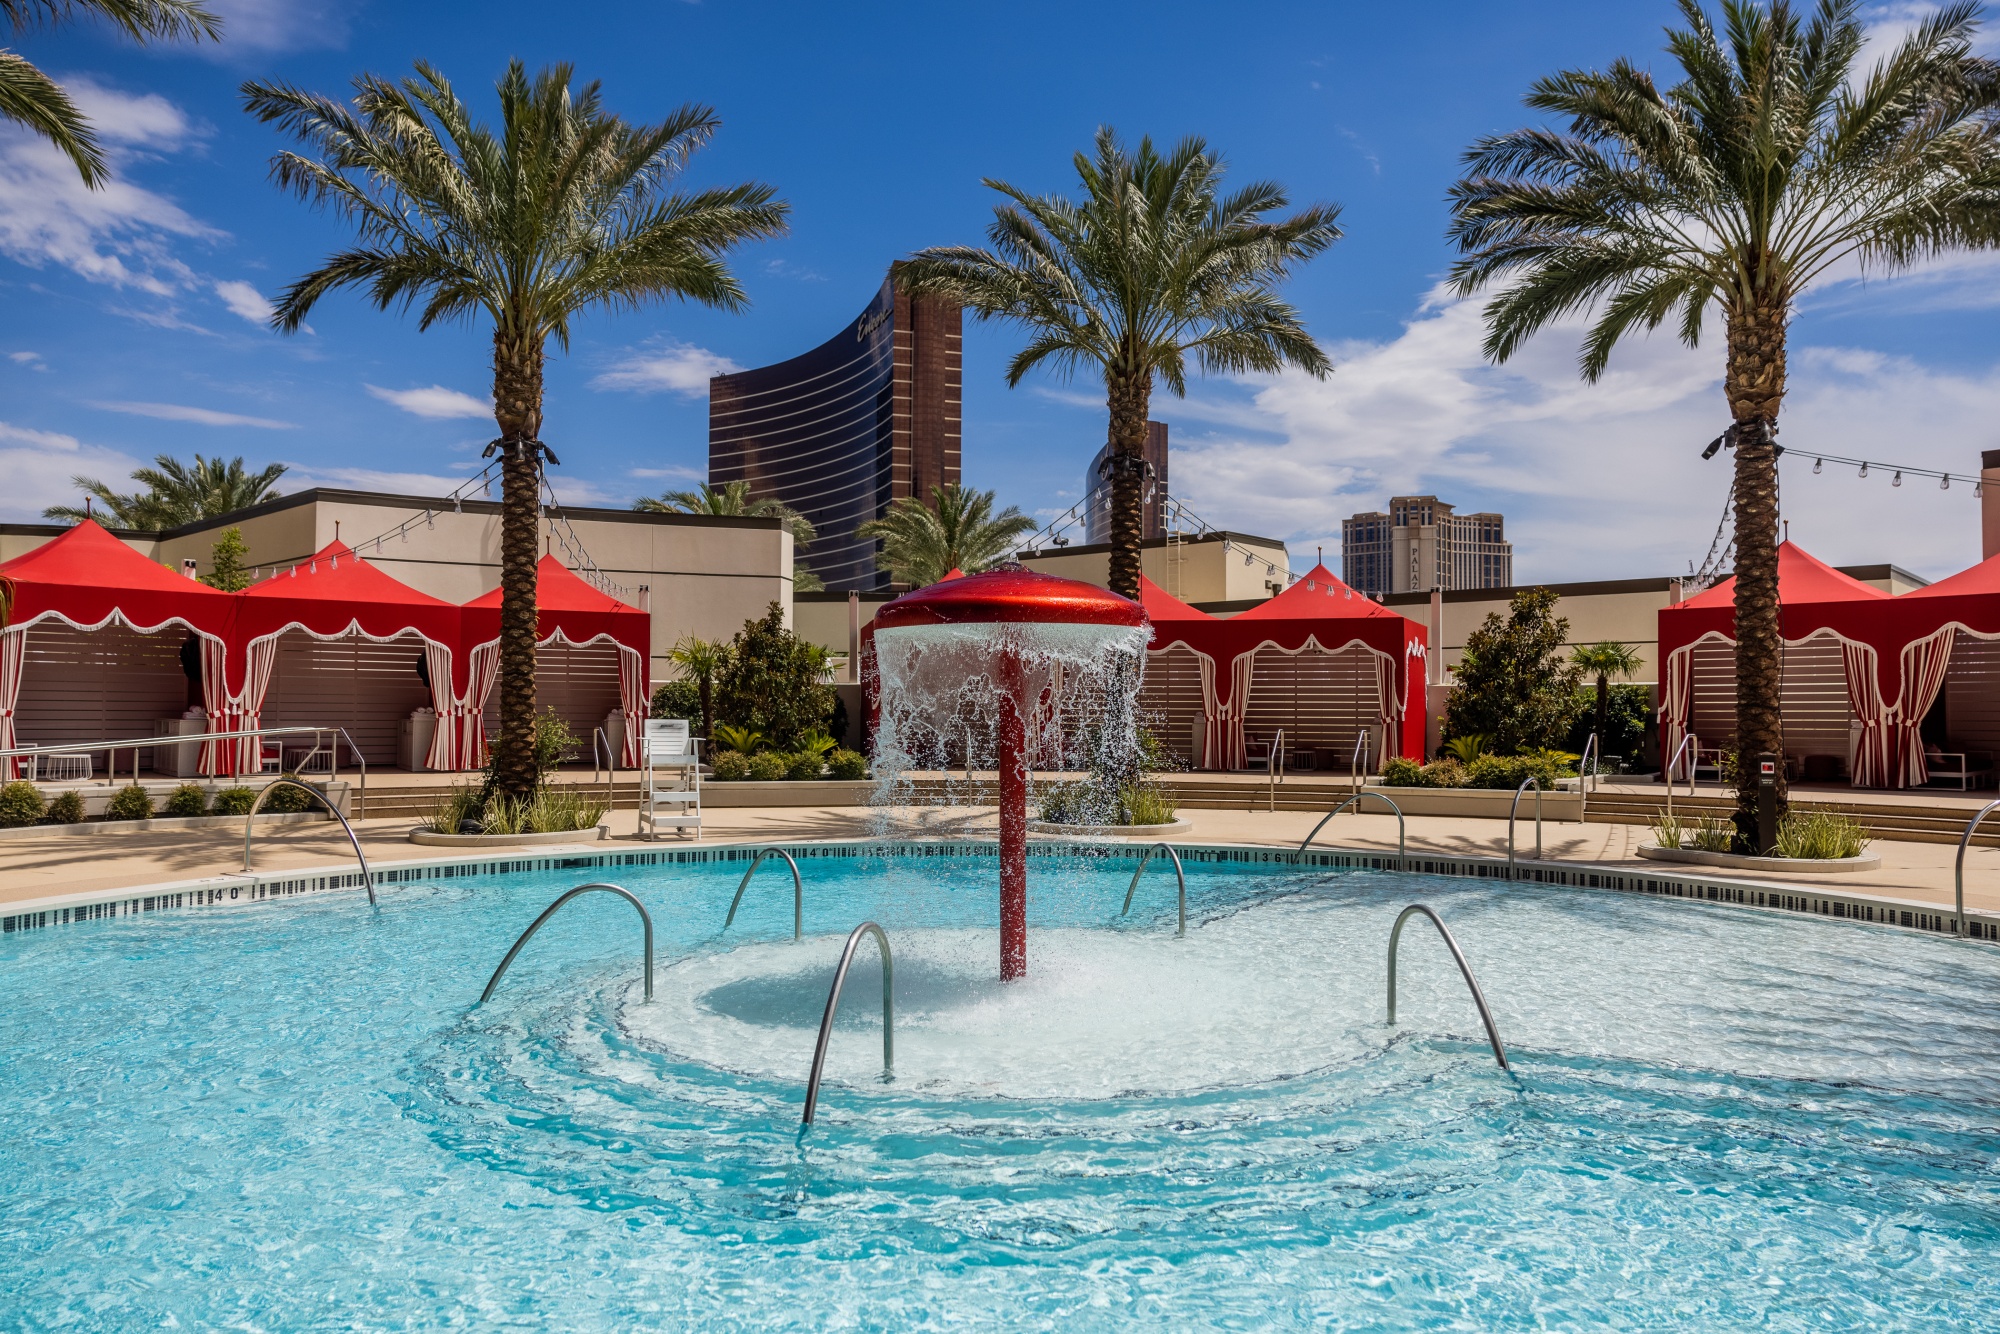 New Resort World Las Vegas Casino Is $4.3 Billion Bet on City's Comeback -  Bloomberg